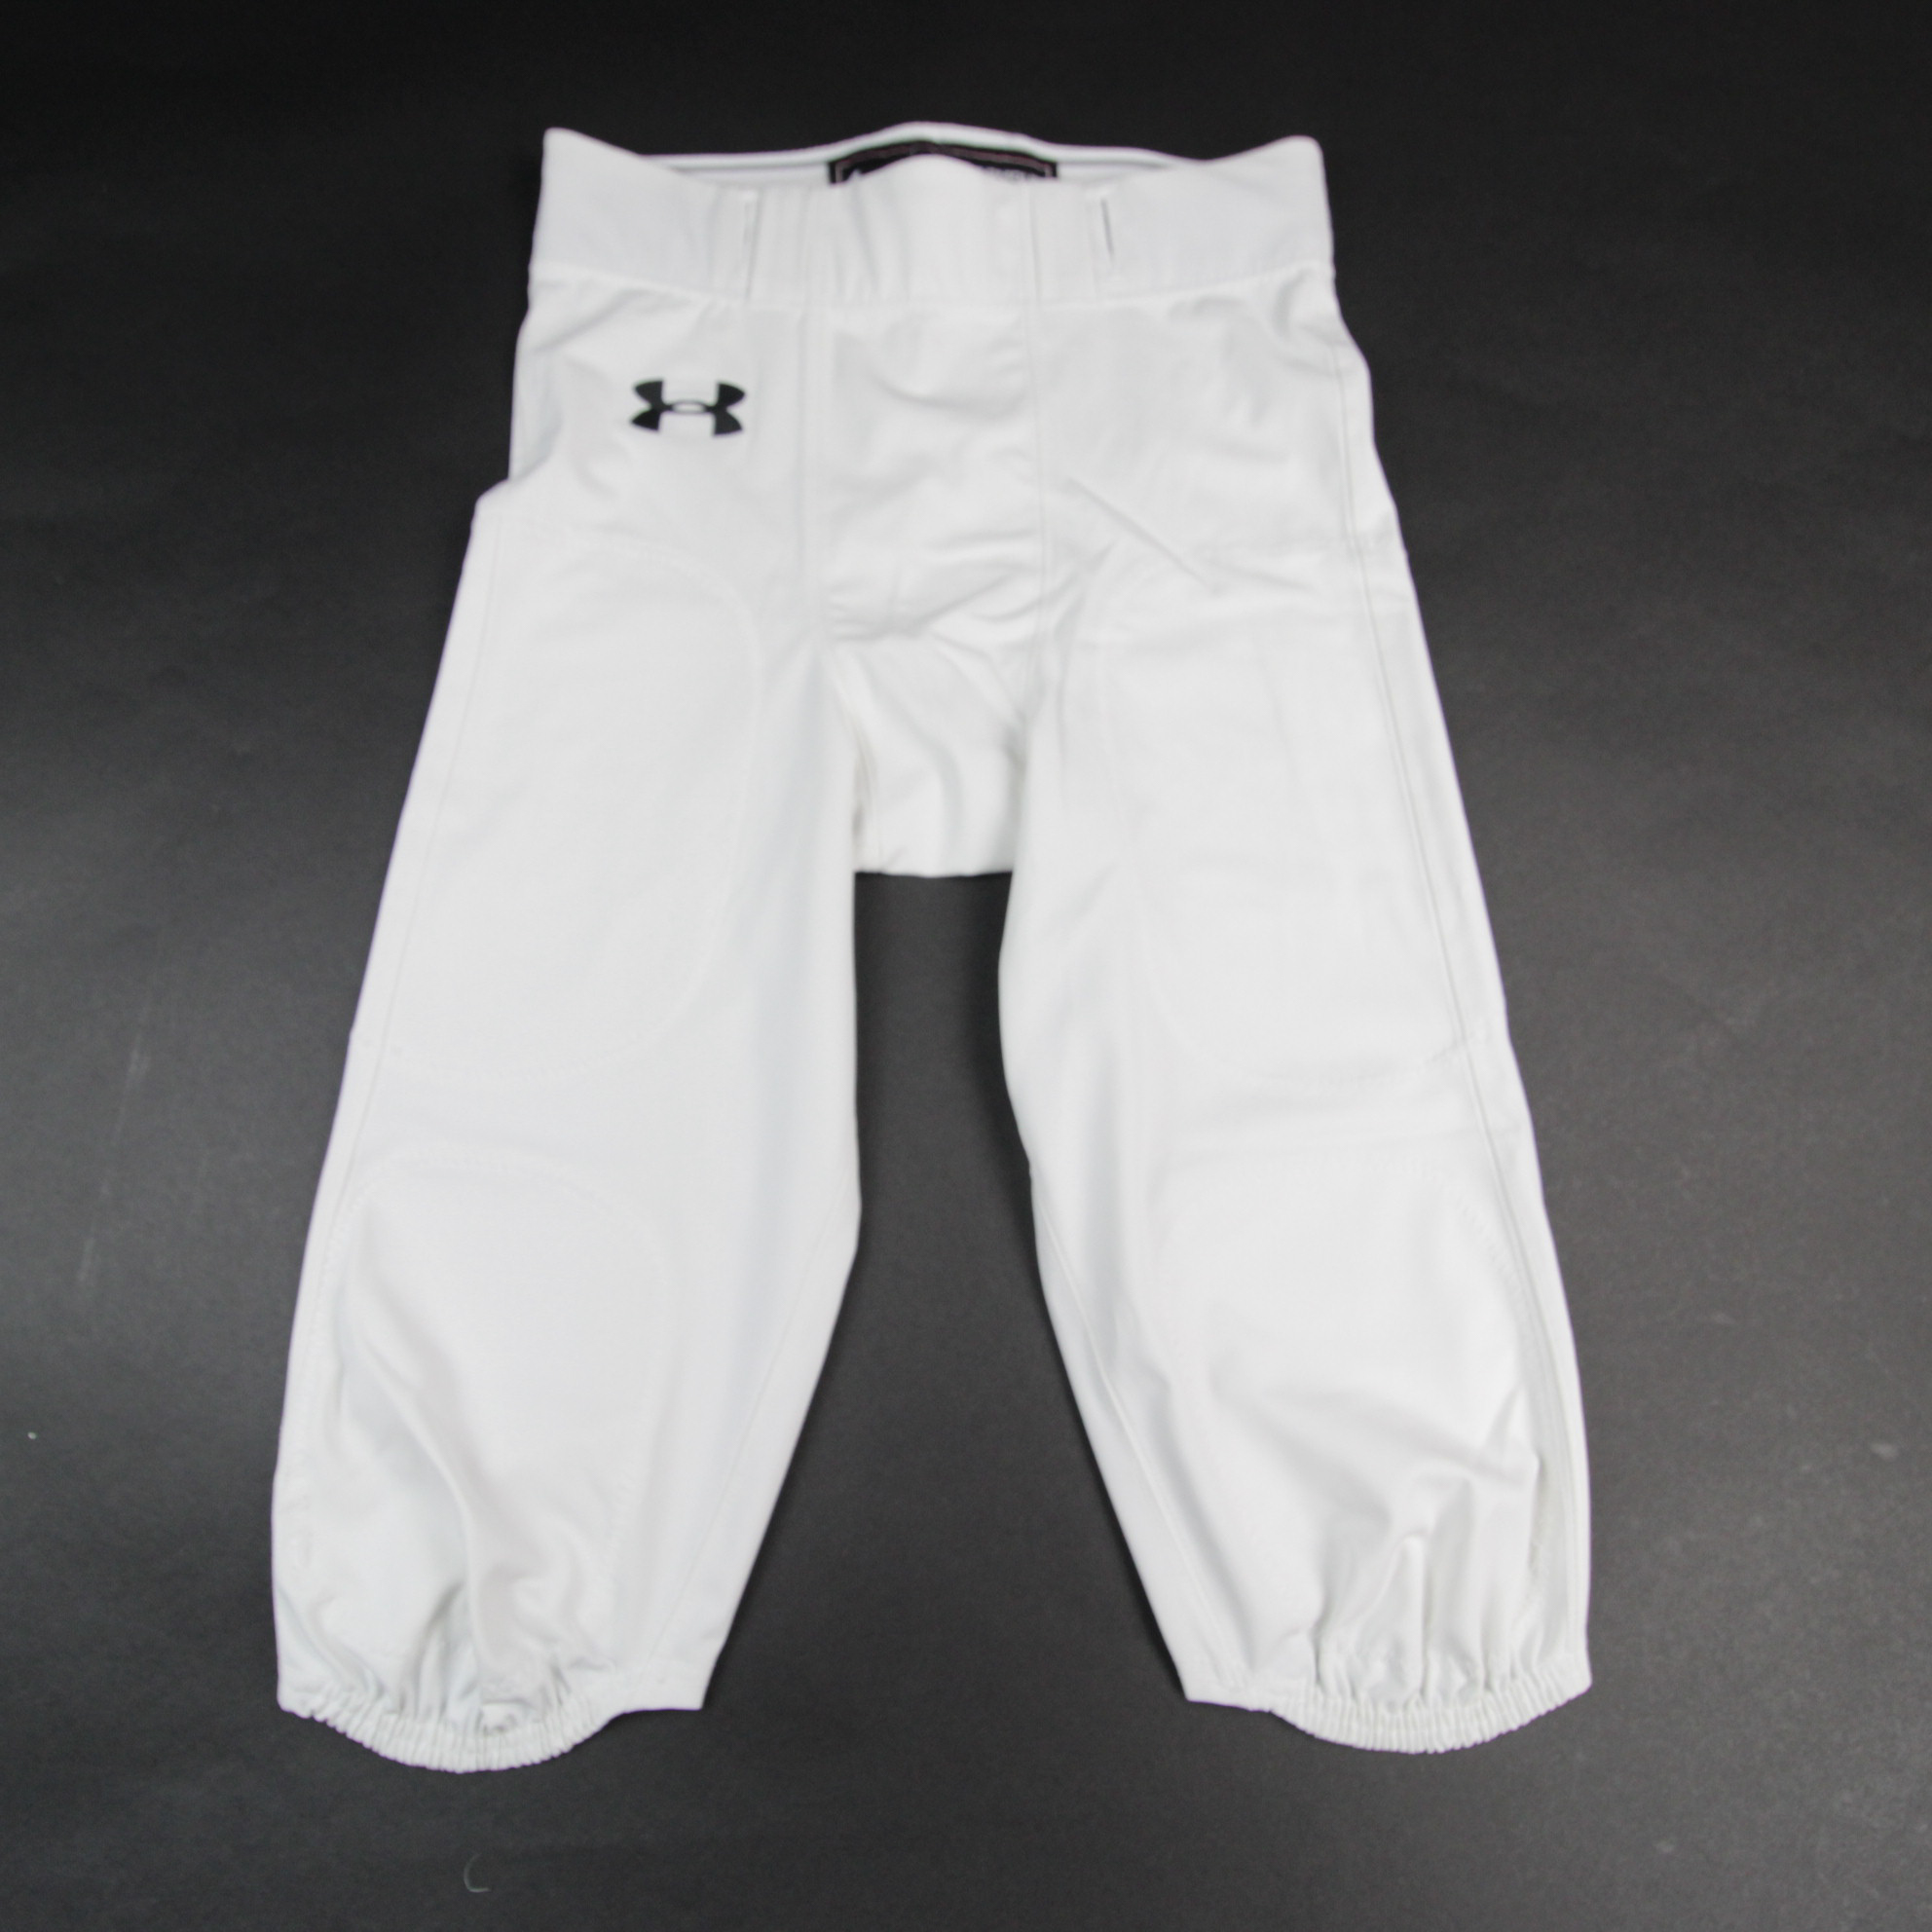 Under Armour Football Pants Men's White Used | eBay